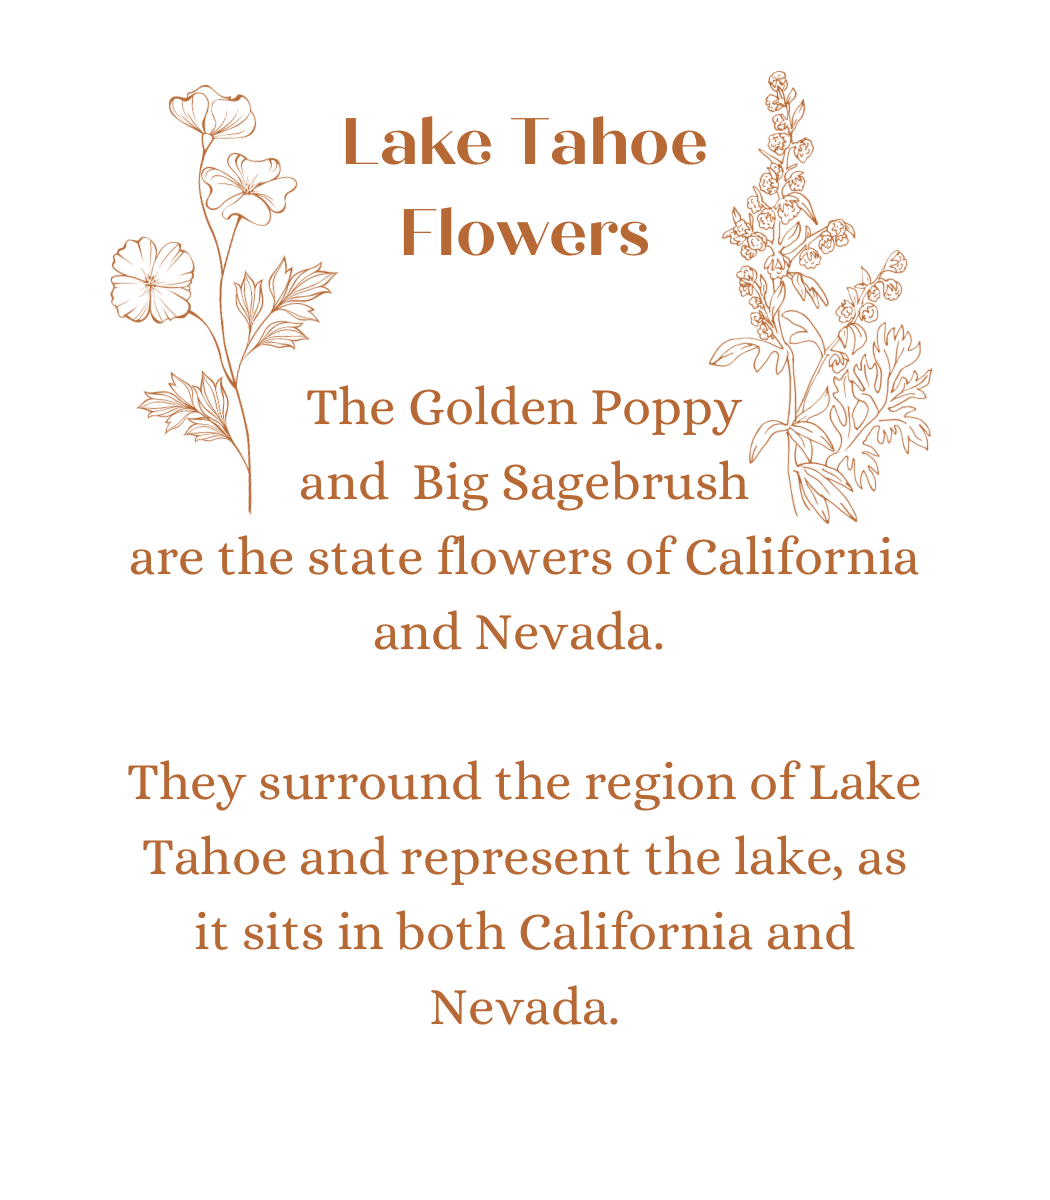 Lake Tahoe Flowers in Theia Silver